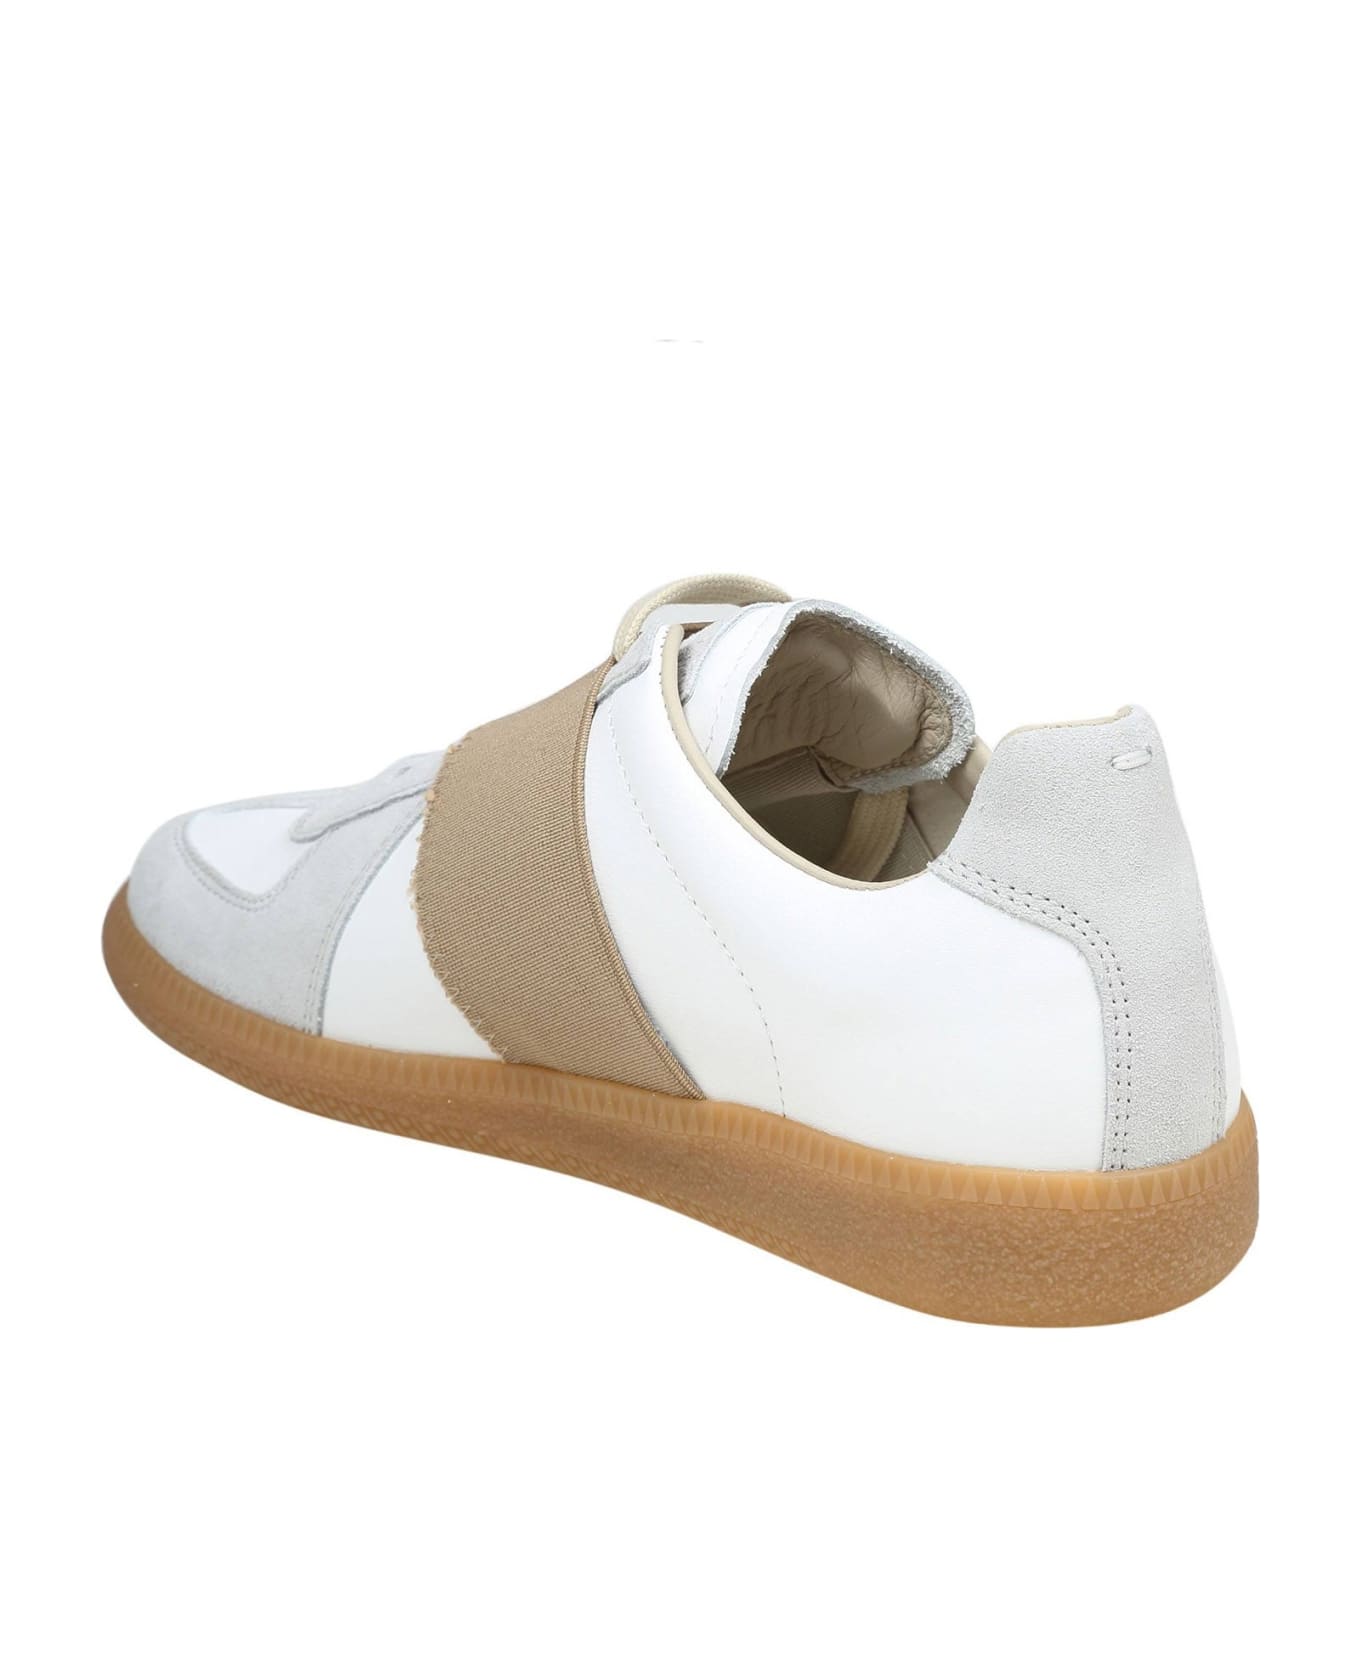 Maison Margiela Replica Sneakers With Elastic Band - WHITE